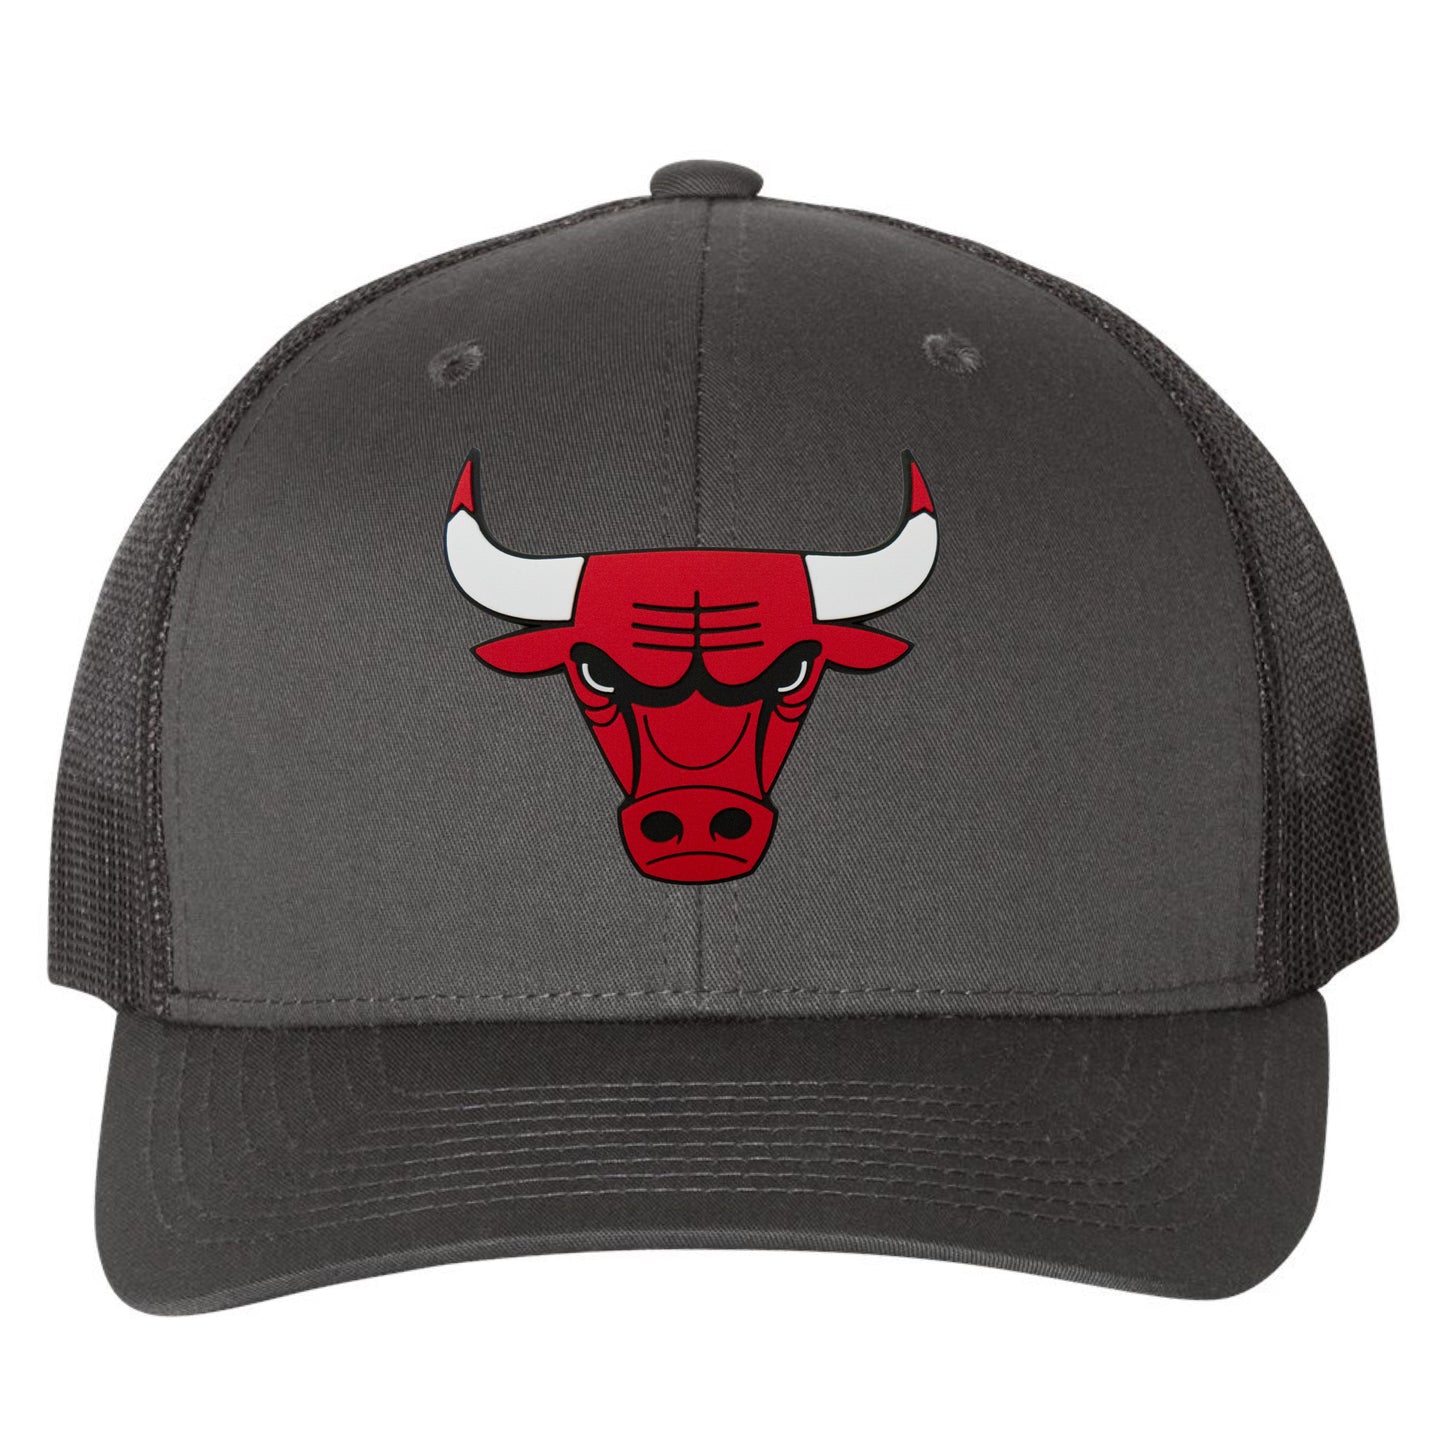 Chicago Bulls 3D Snapback Trucker Hat- Charcoal/ Black - Ten Gallon Hat Co.